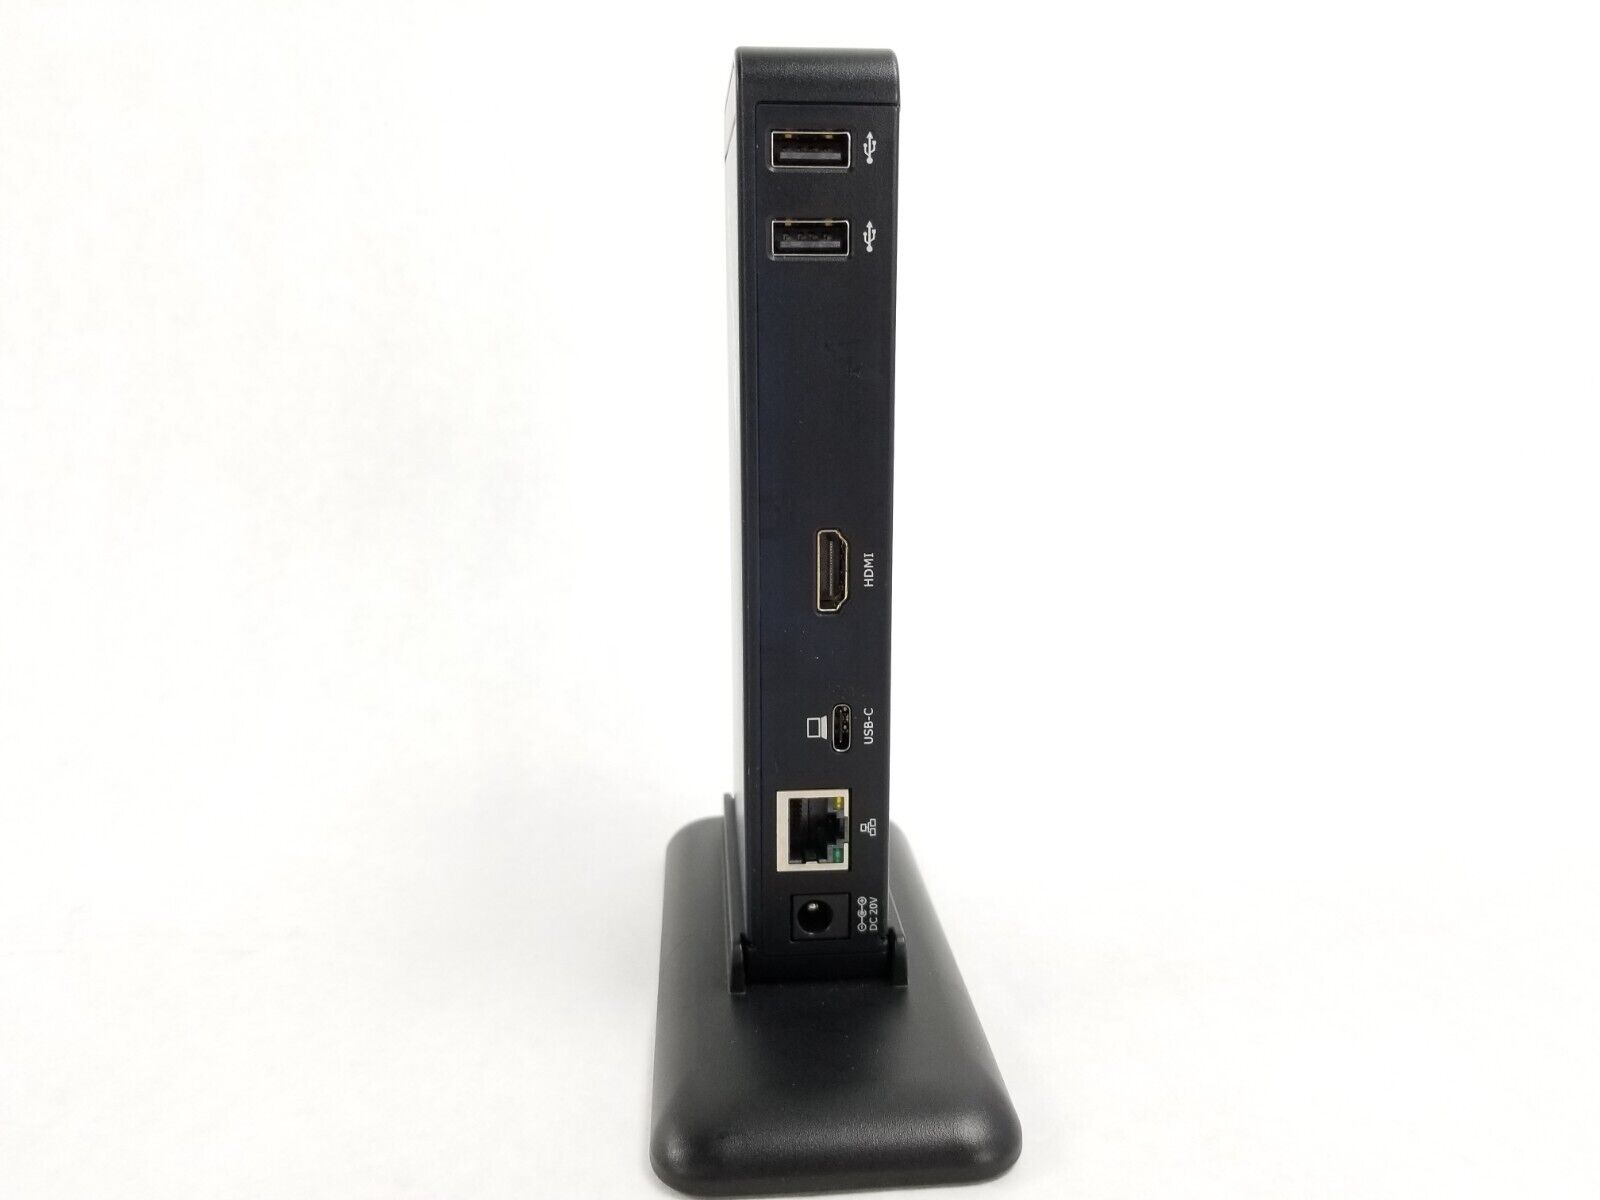 Plugable USB-C Docking Station w/PD No AC Adapter